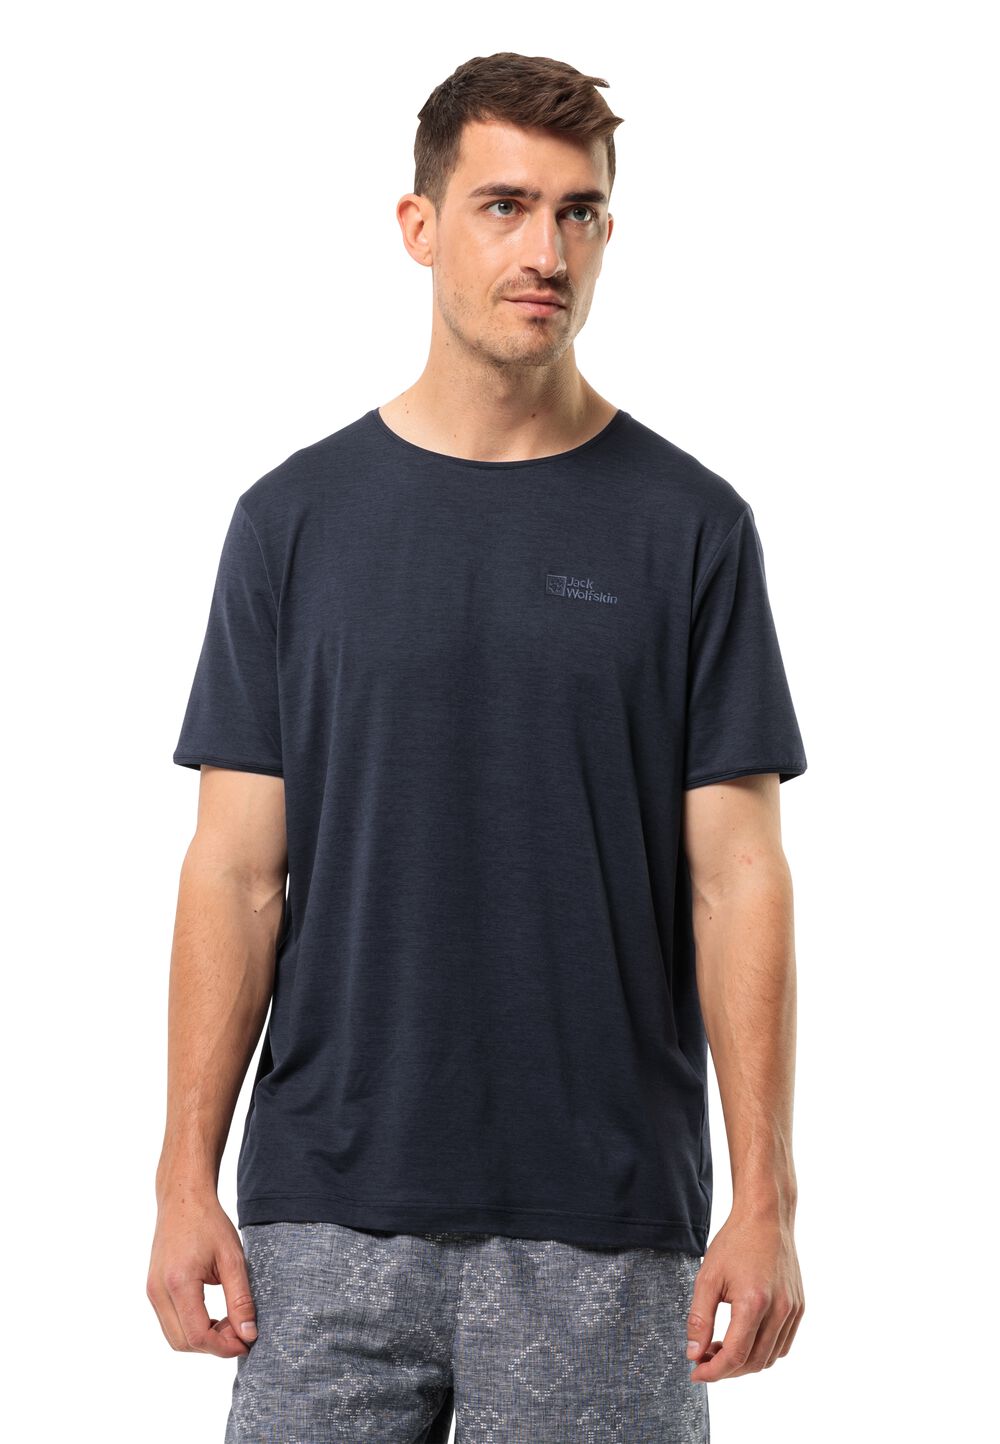 Jack Wolfskin Travel T-Shirt Men Functioneel shirt Heren M blue night blue